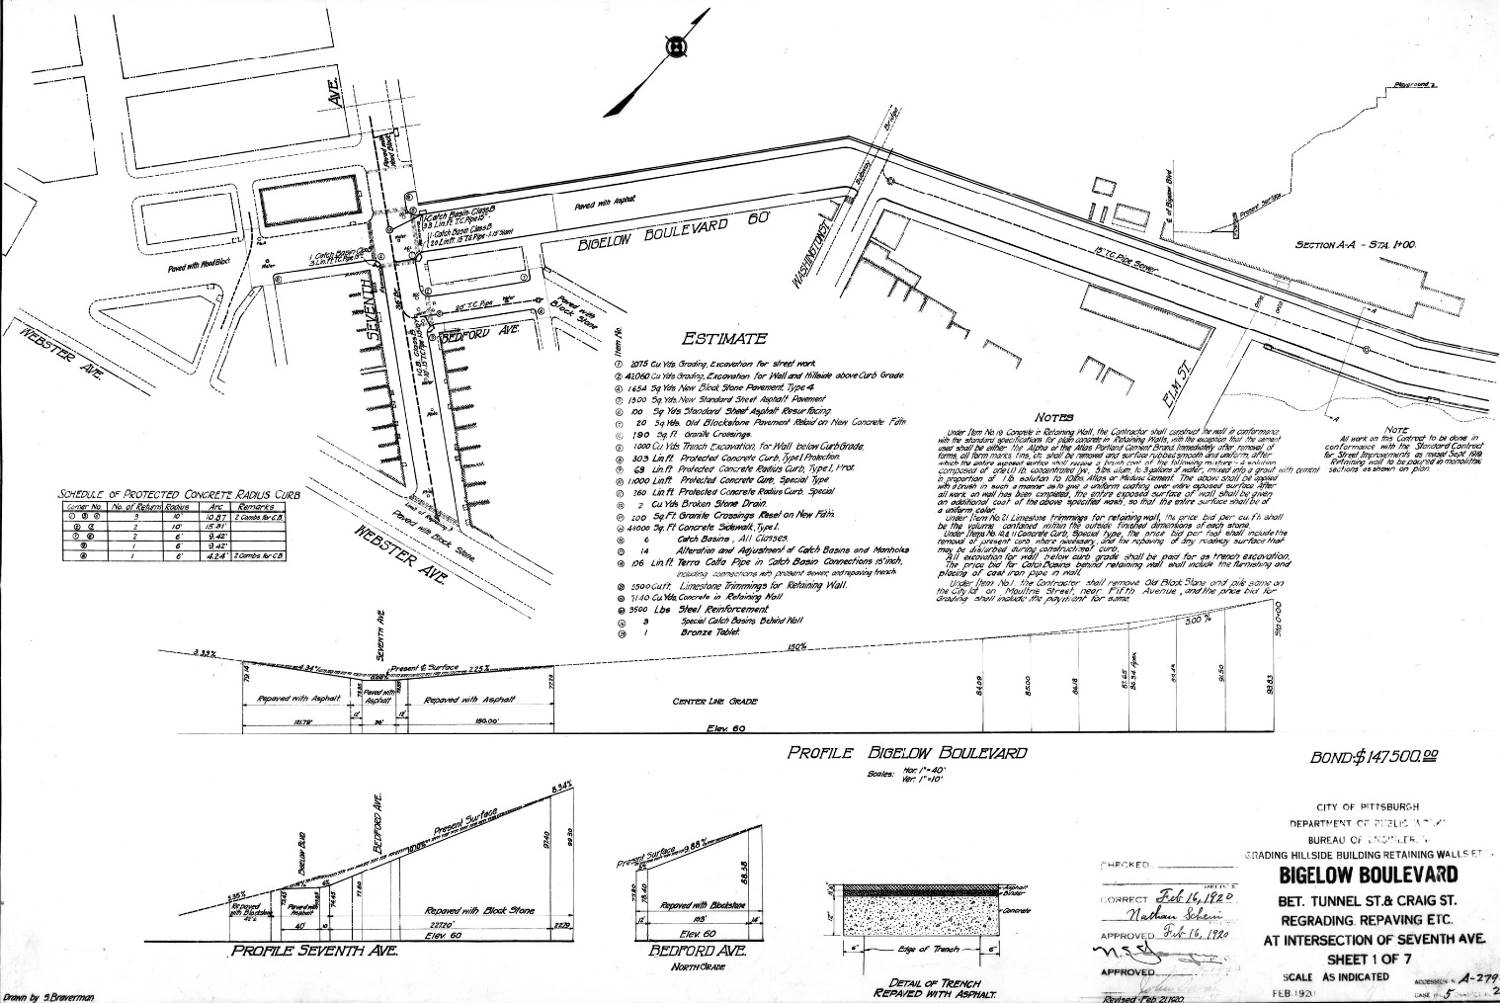 1919 renovation plans for
Seventh Avenue entranceway.